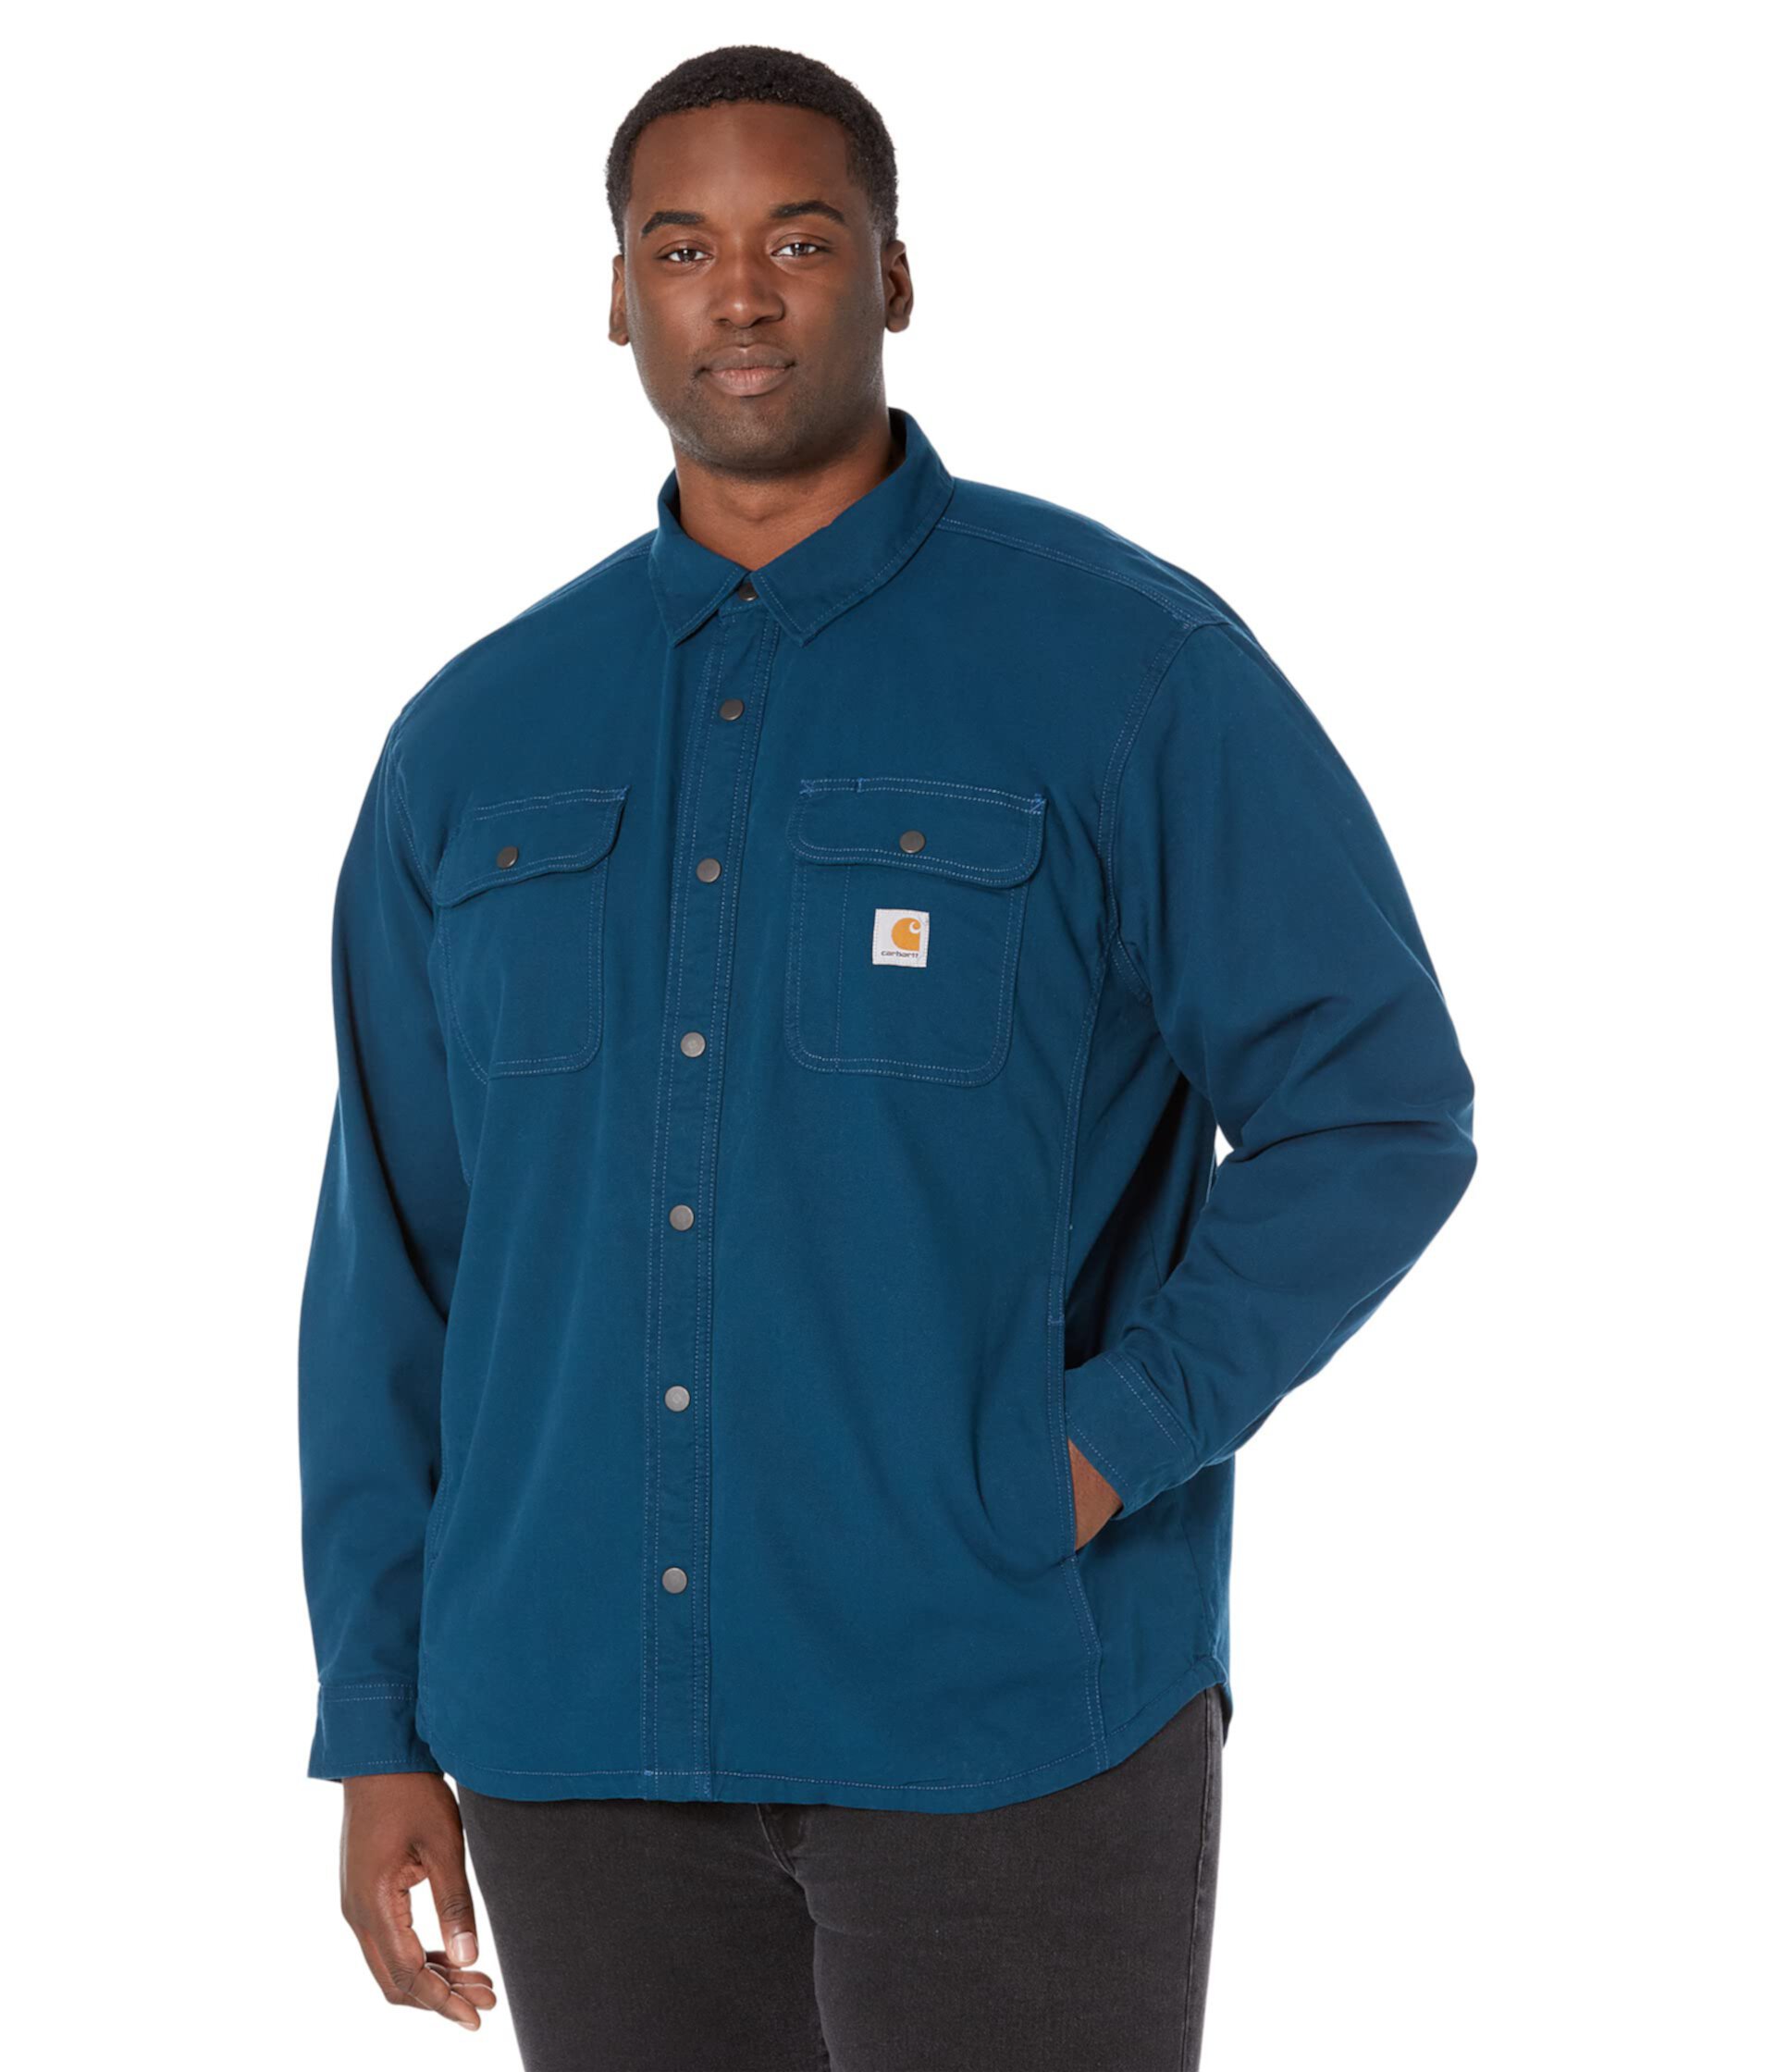 Мужская рубашка-куртка Carhartt Rugged Flex Relaxed Fit Carhartt